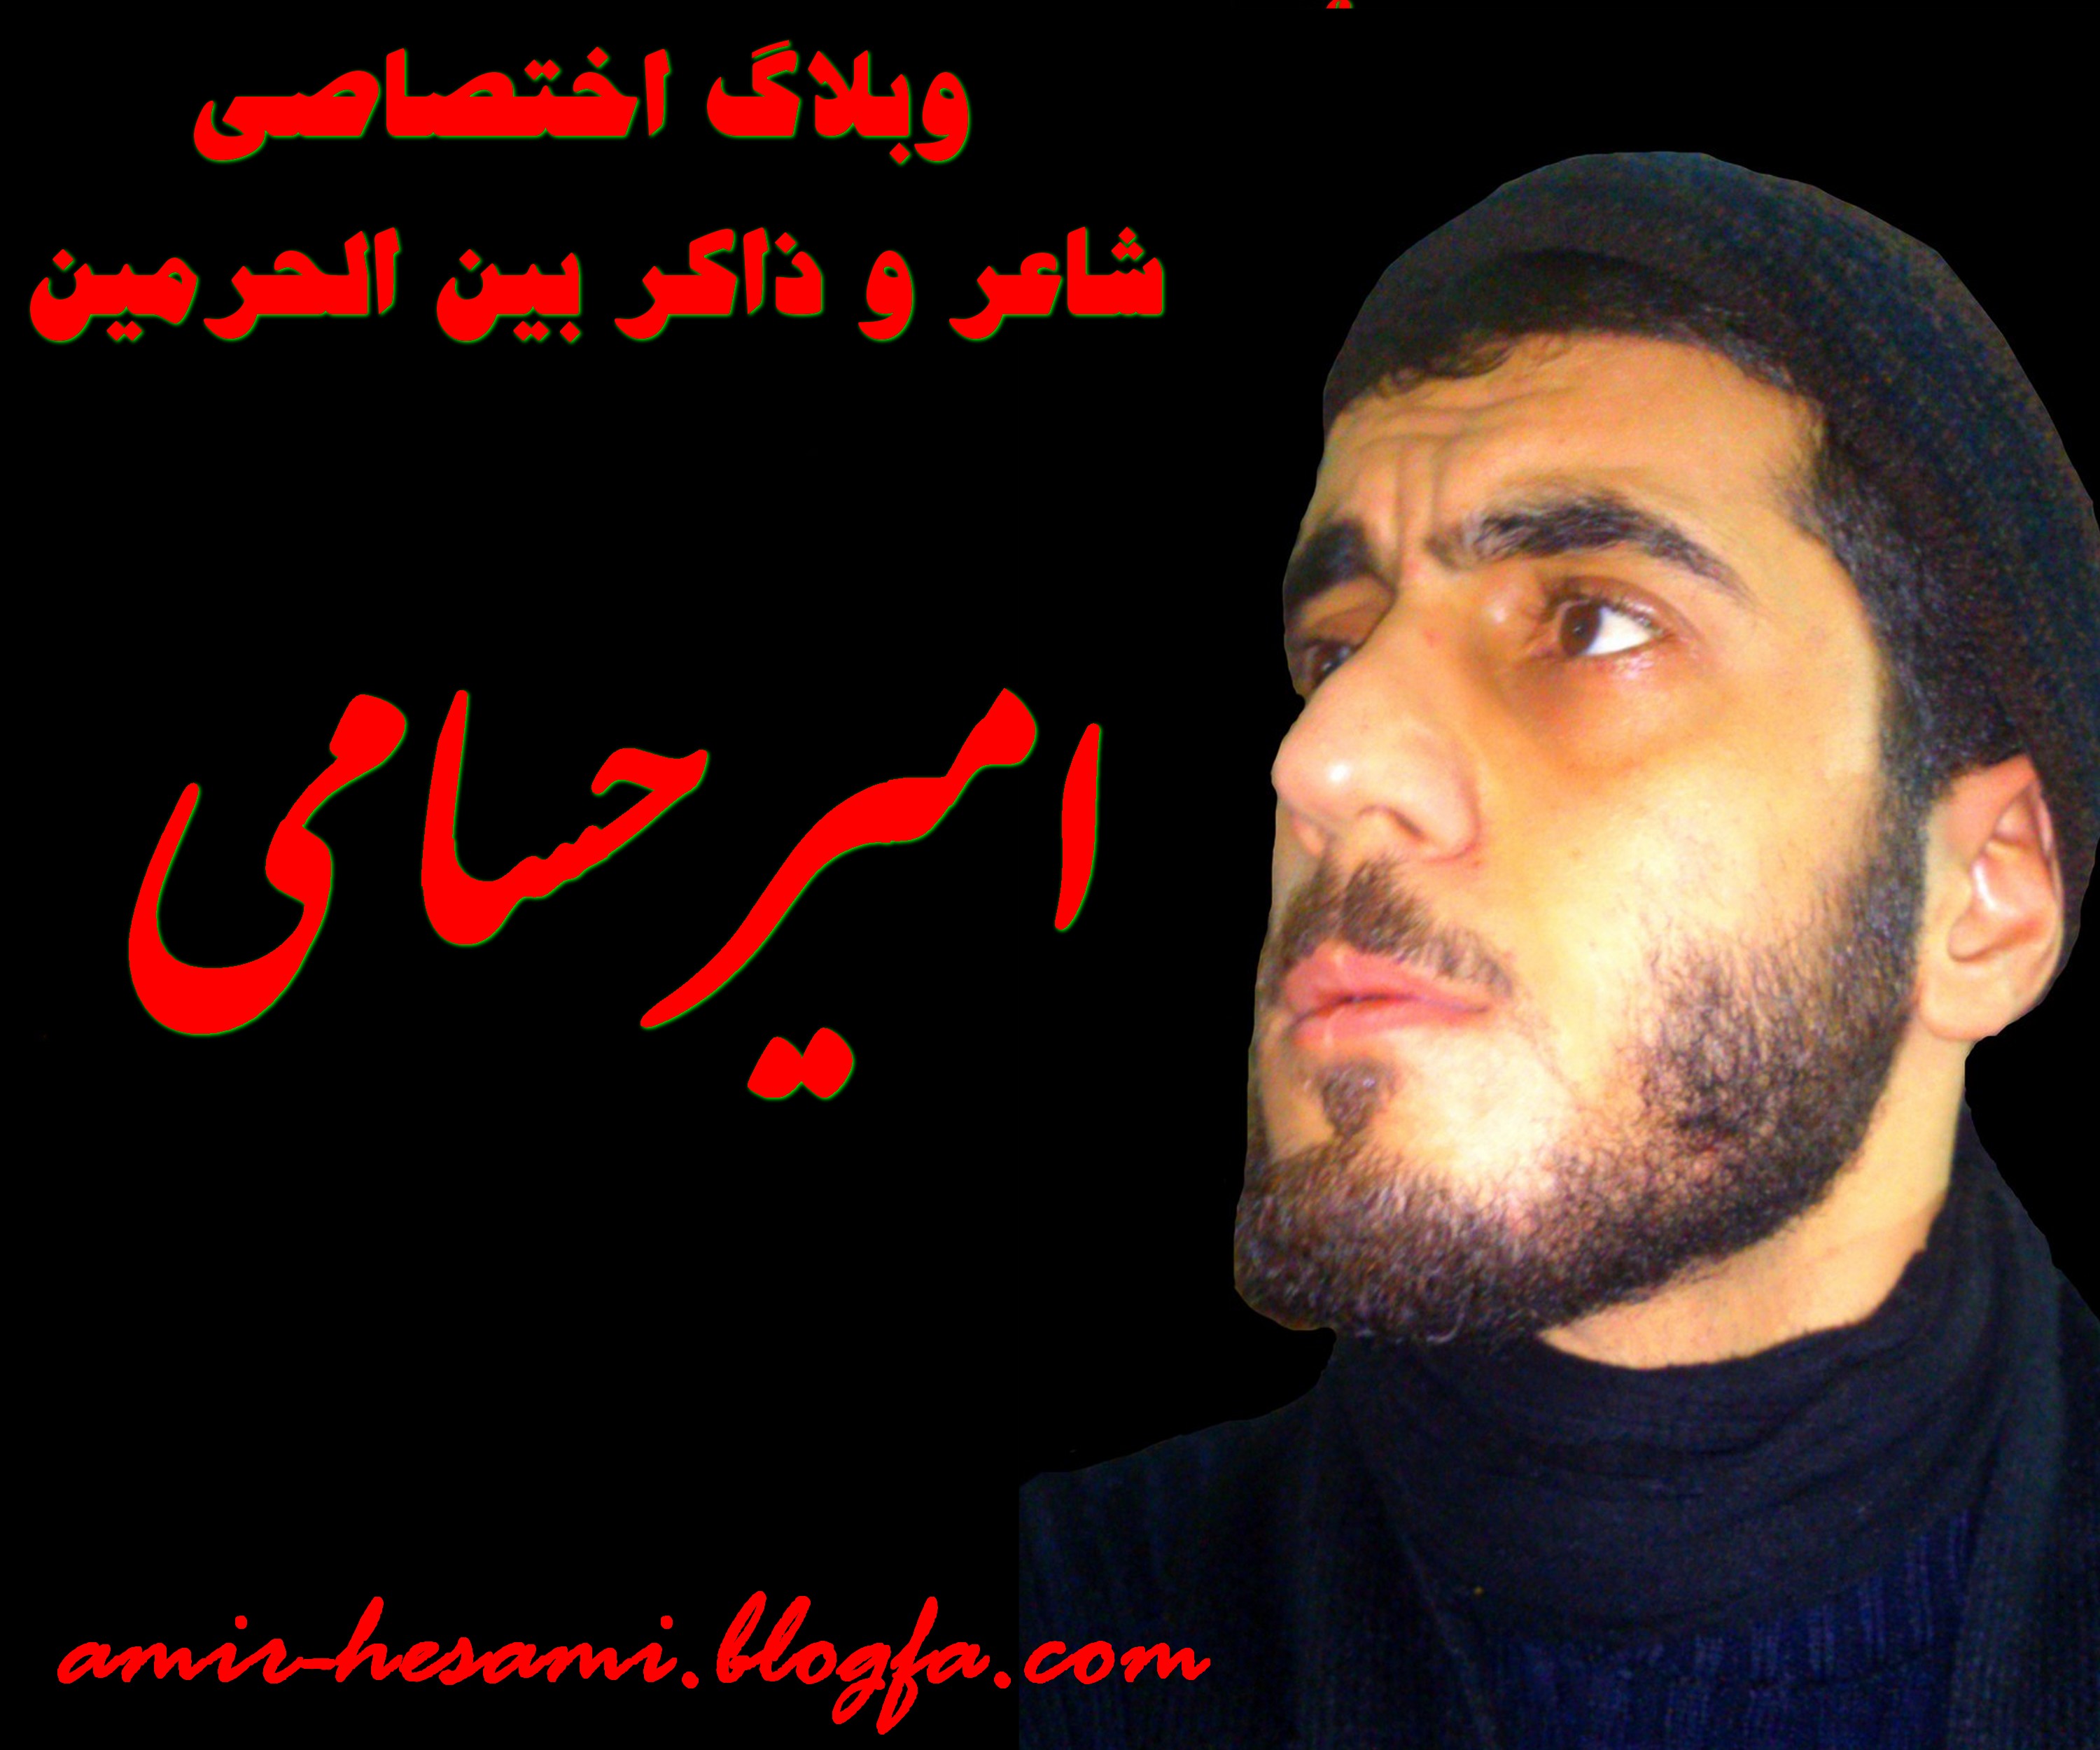 وبلاگ شاعر و مداح اهل بیت(ع)امیر حسامی